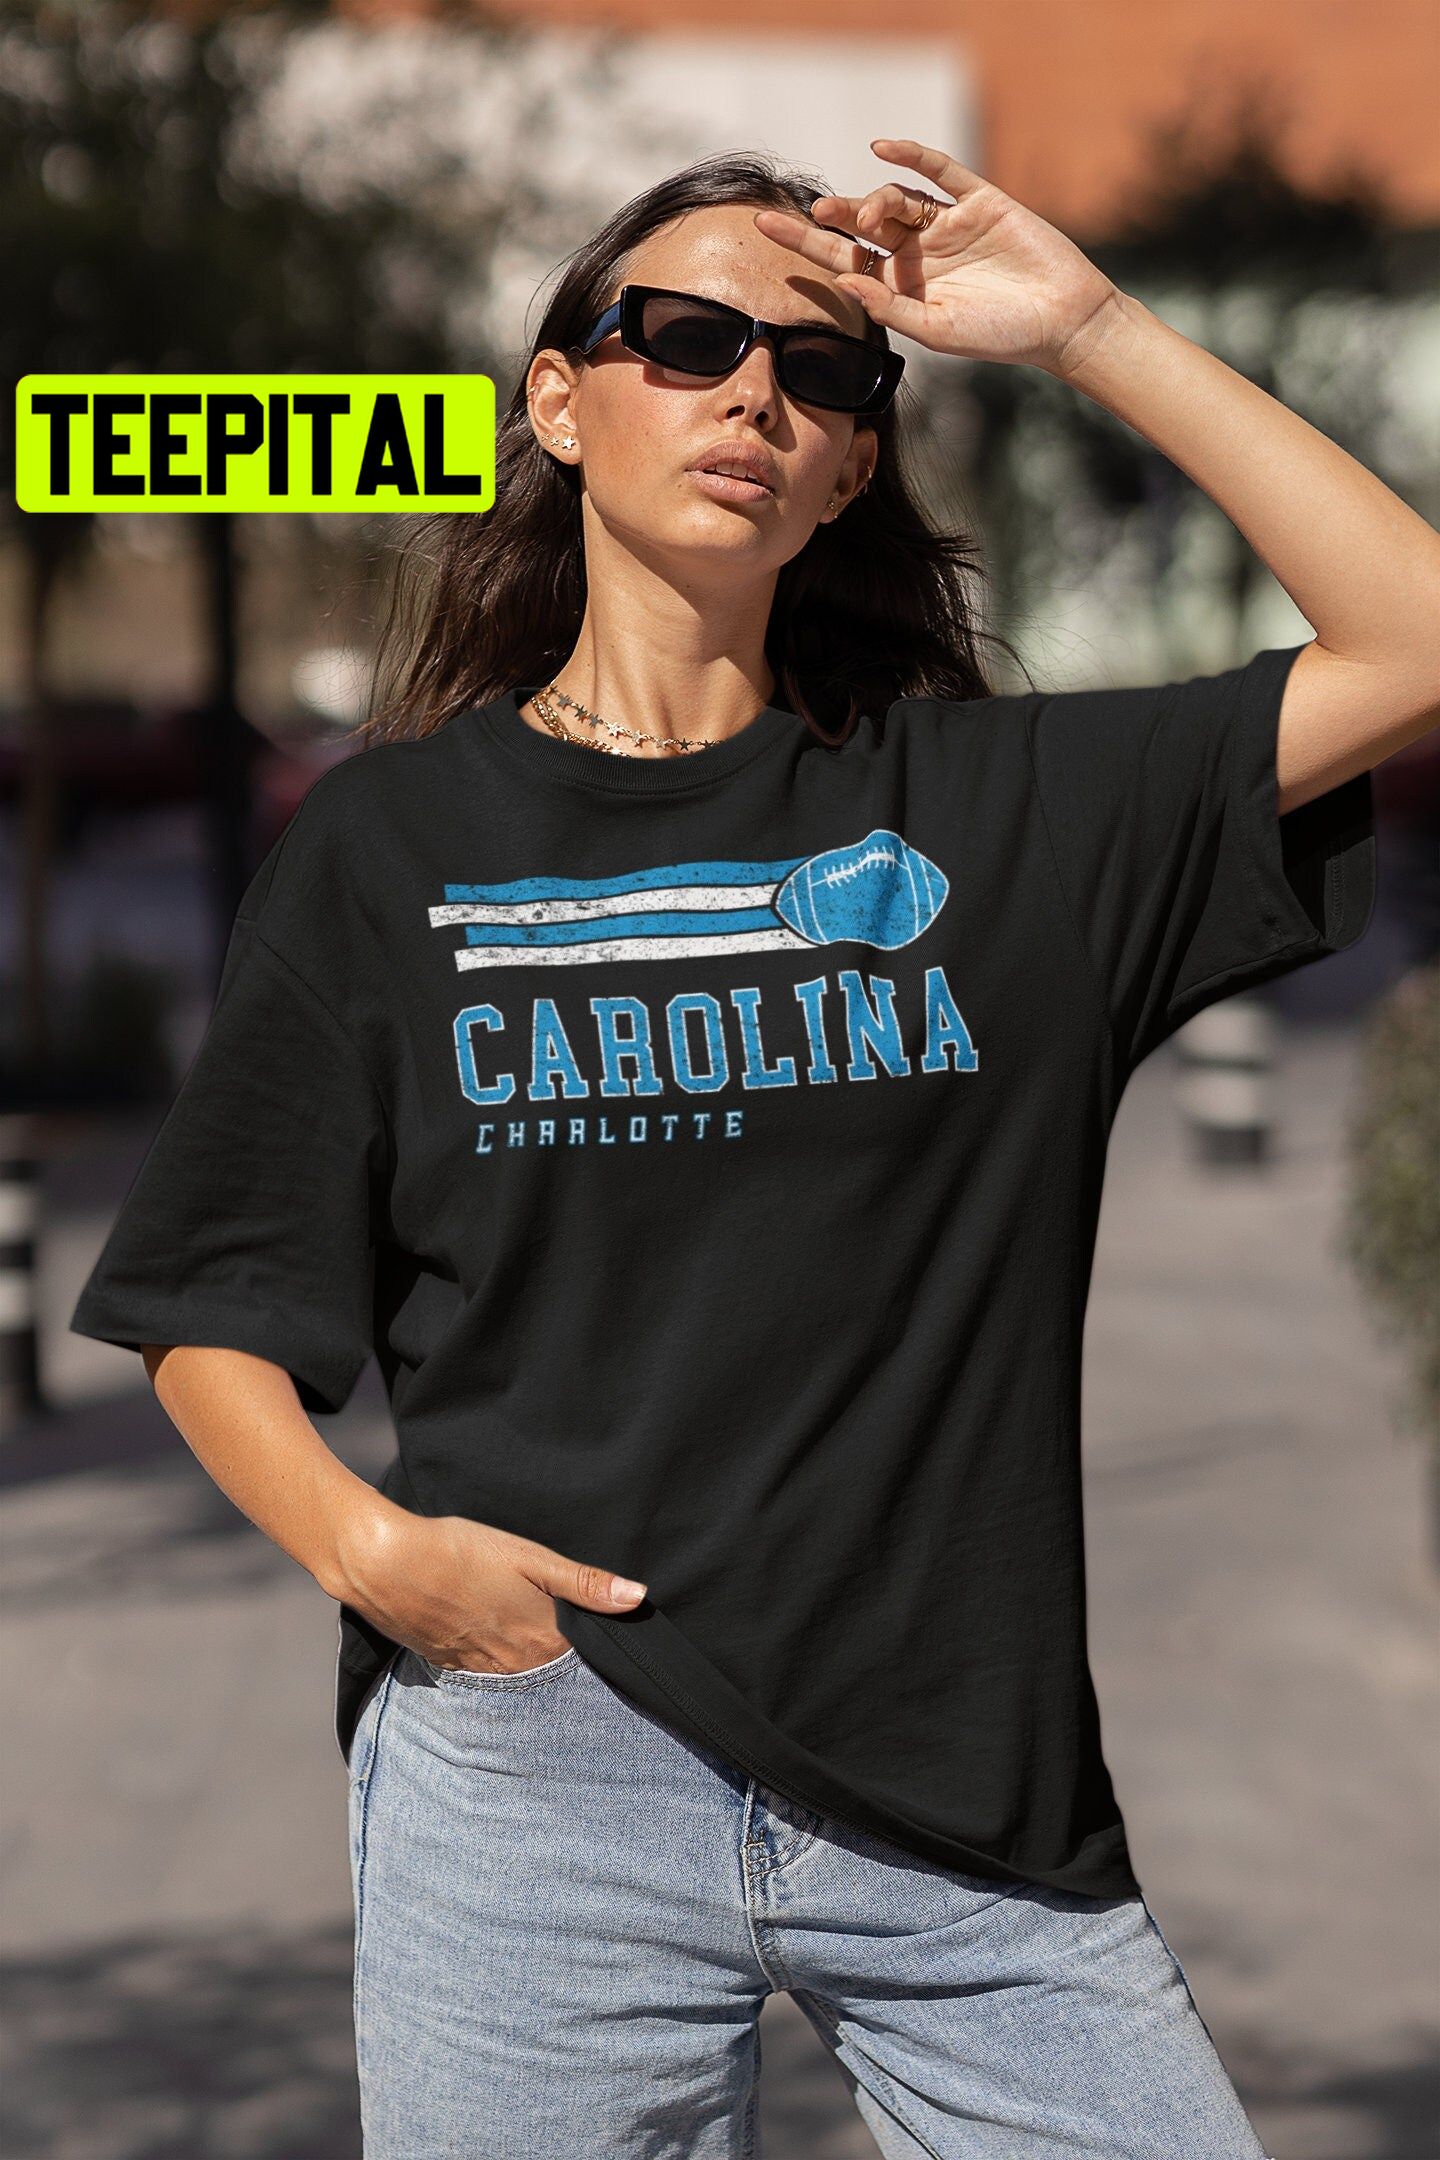 Carolina Panthers Retro Football Unisex T-Shirt